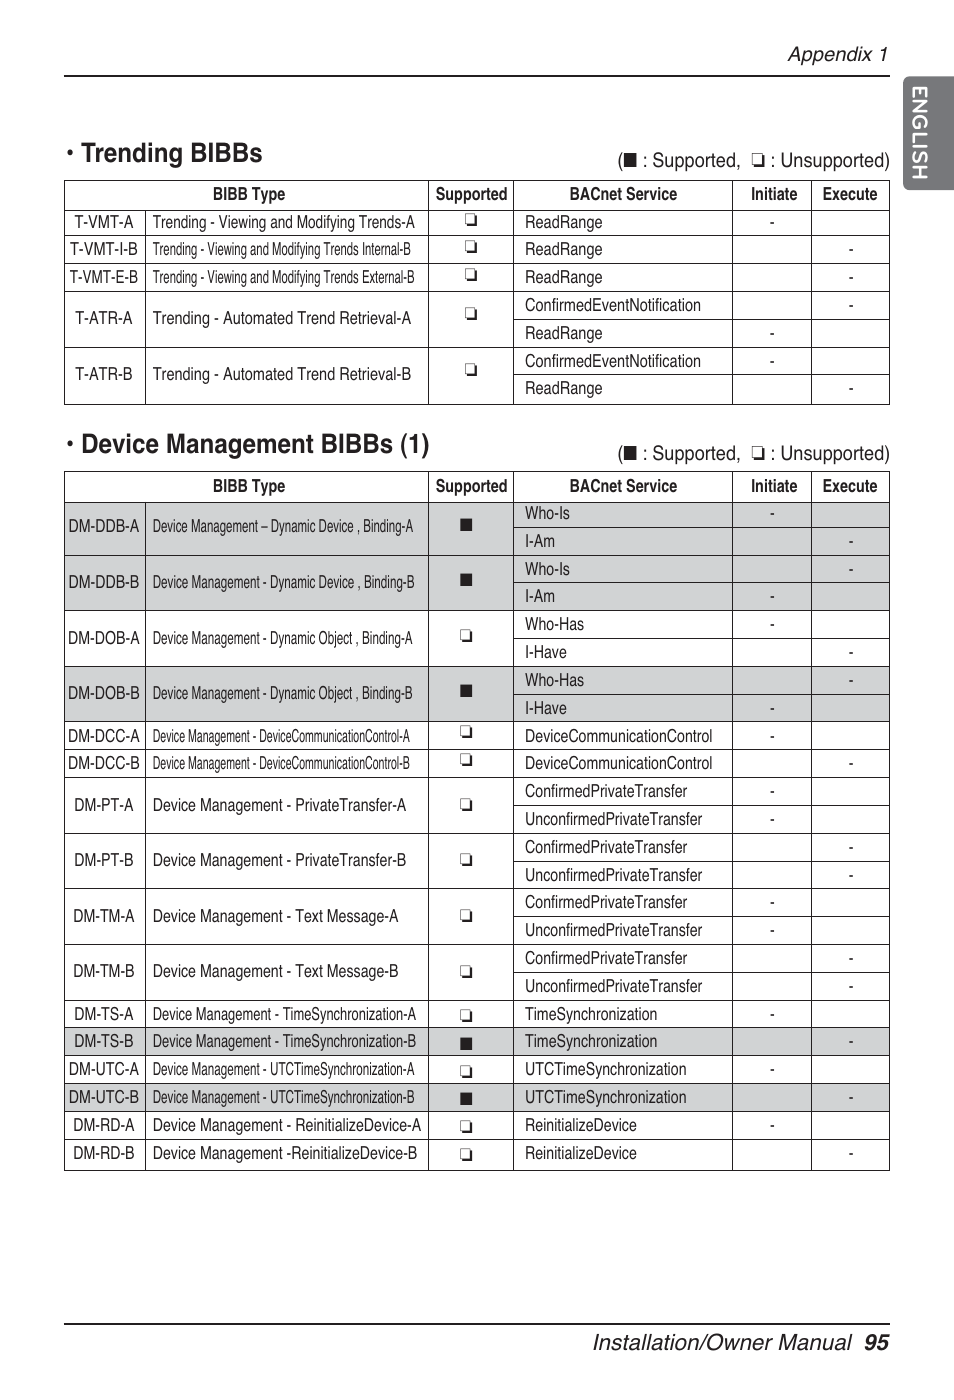 Trending bibbs, Device management bibbs (1), Installation/owner manual 95 english | LG PQNFB17B0 User Manual | Page 95 / 756